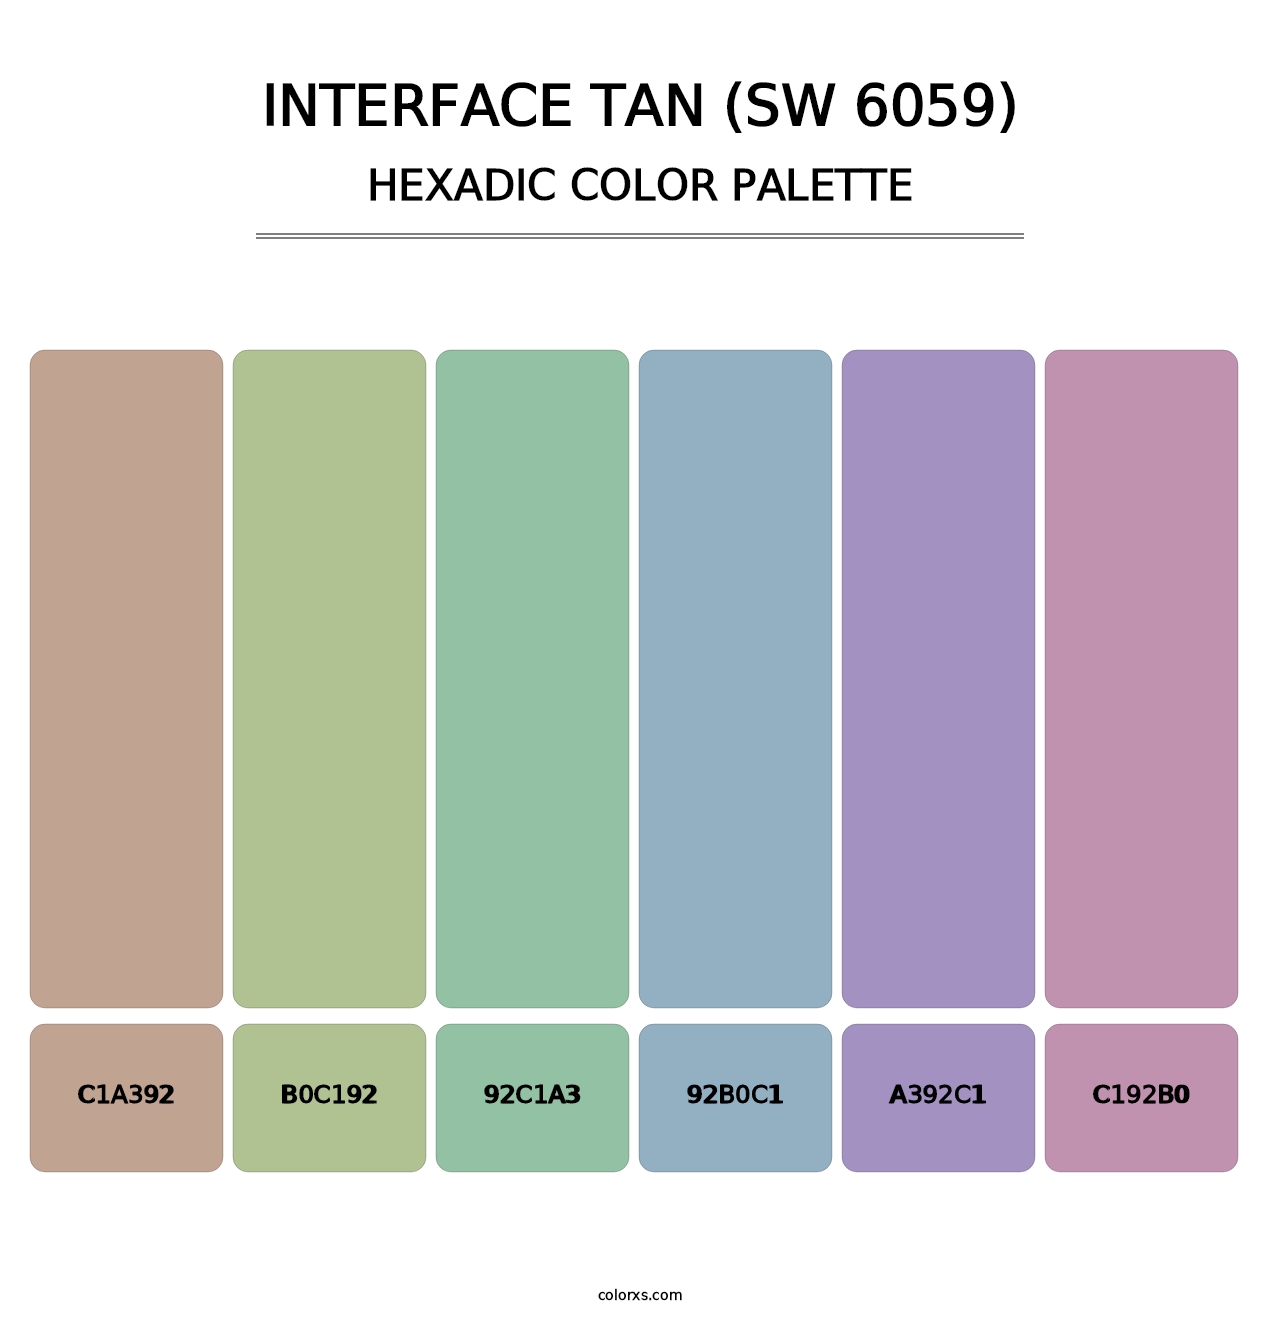 Interface Tan (SW 6059) - Hexadic Color Palette